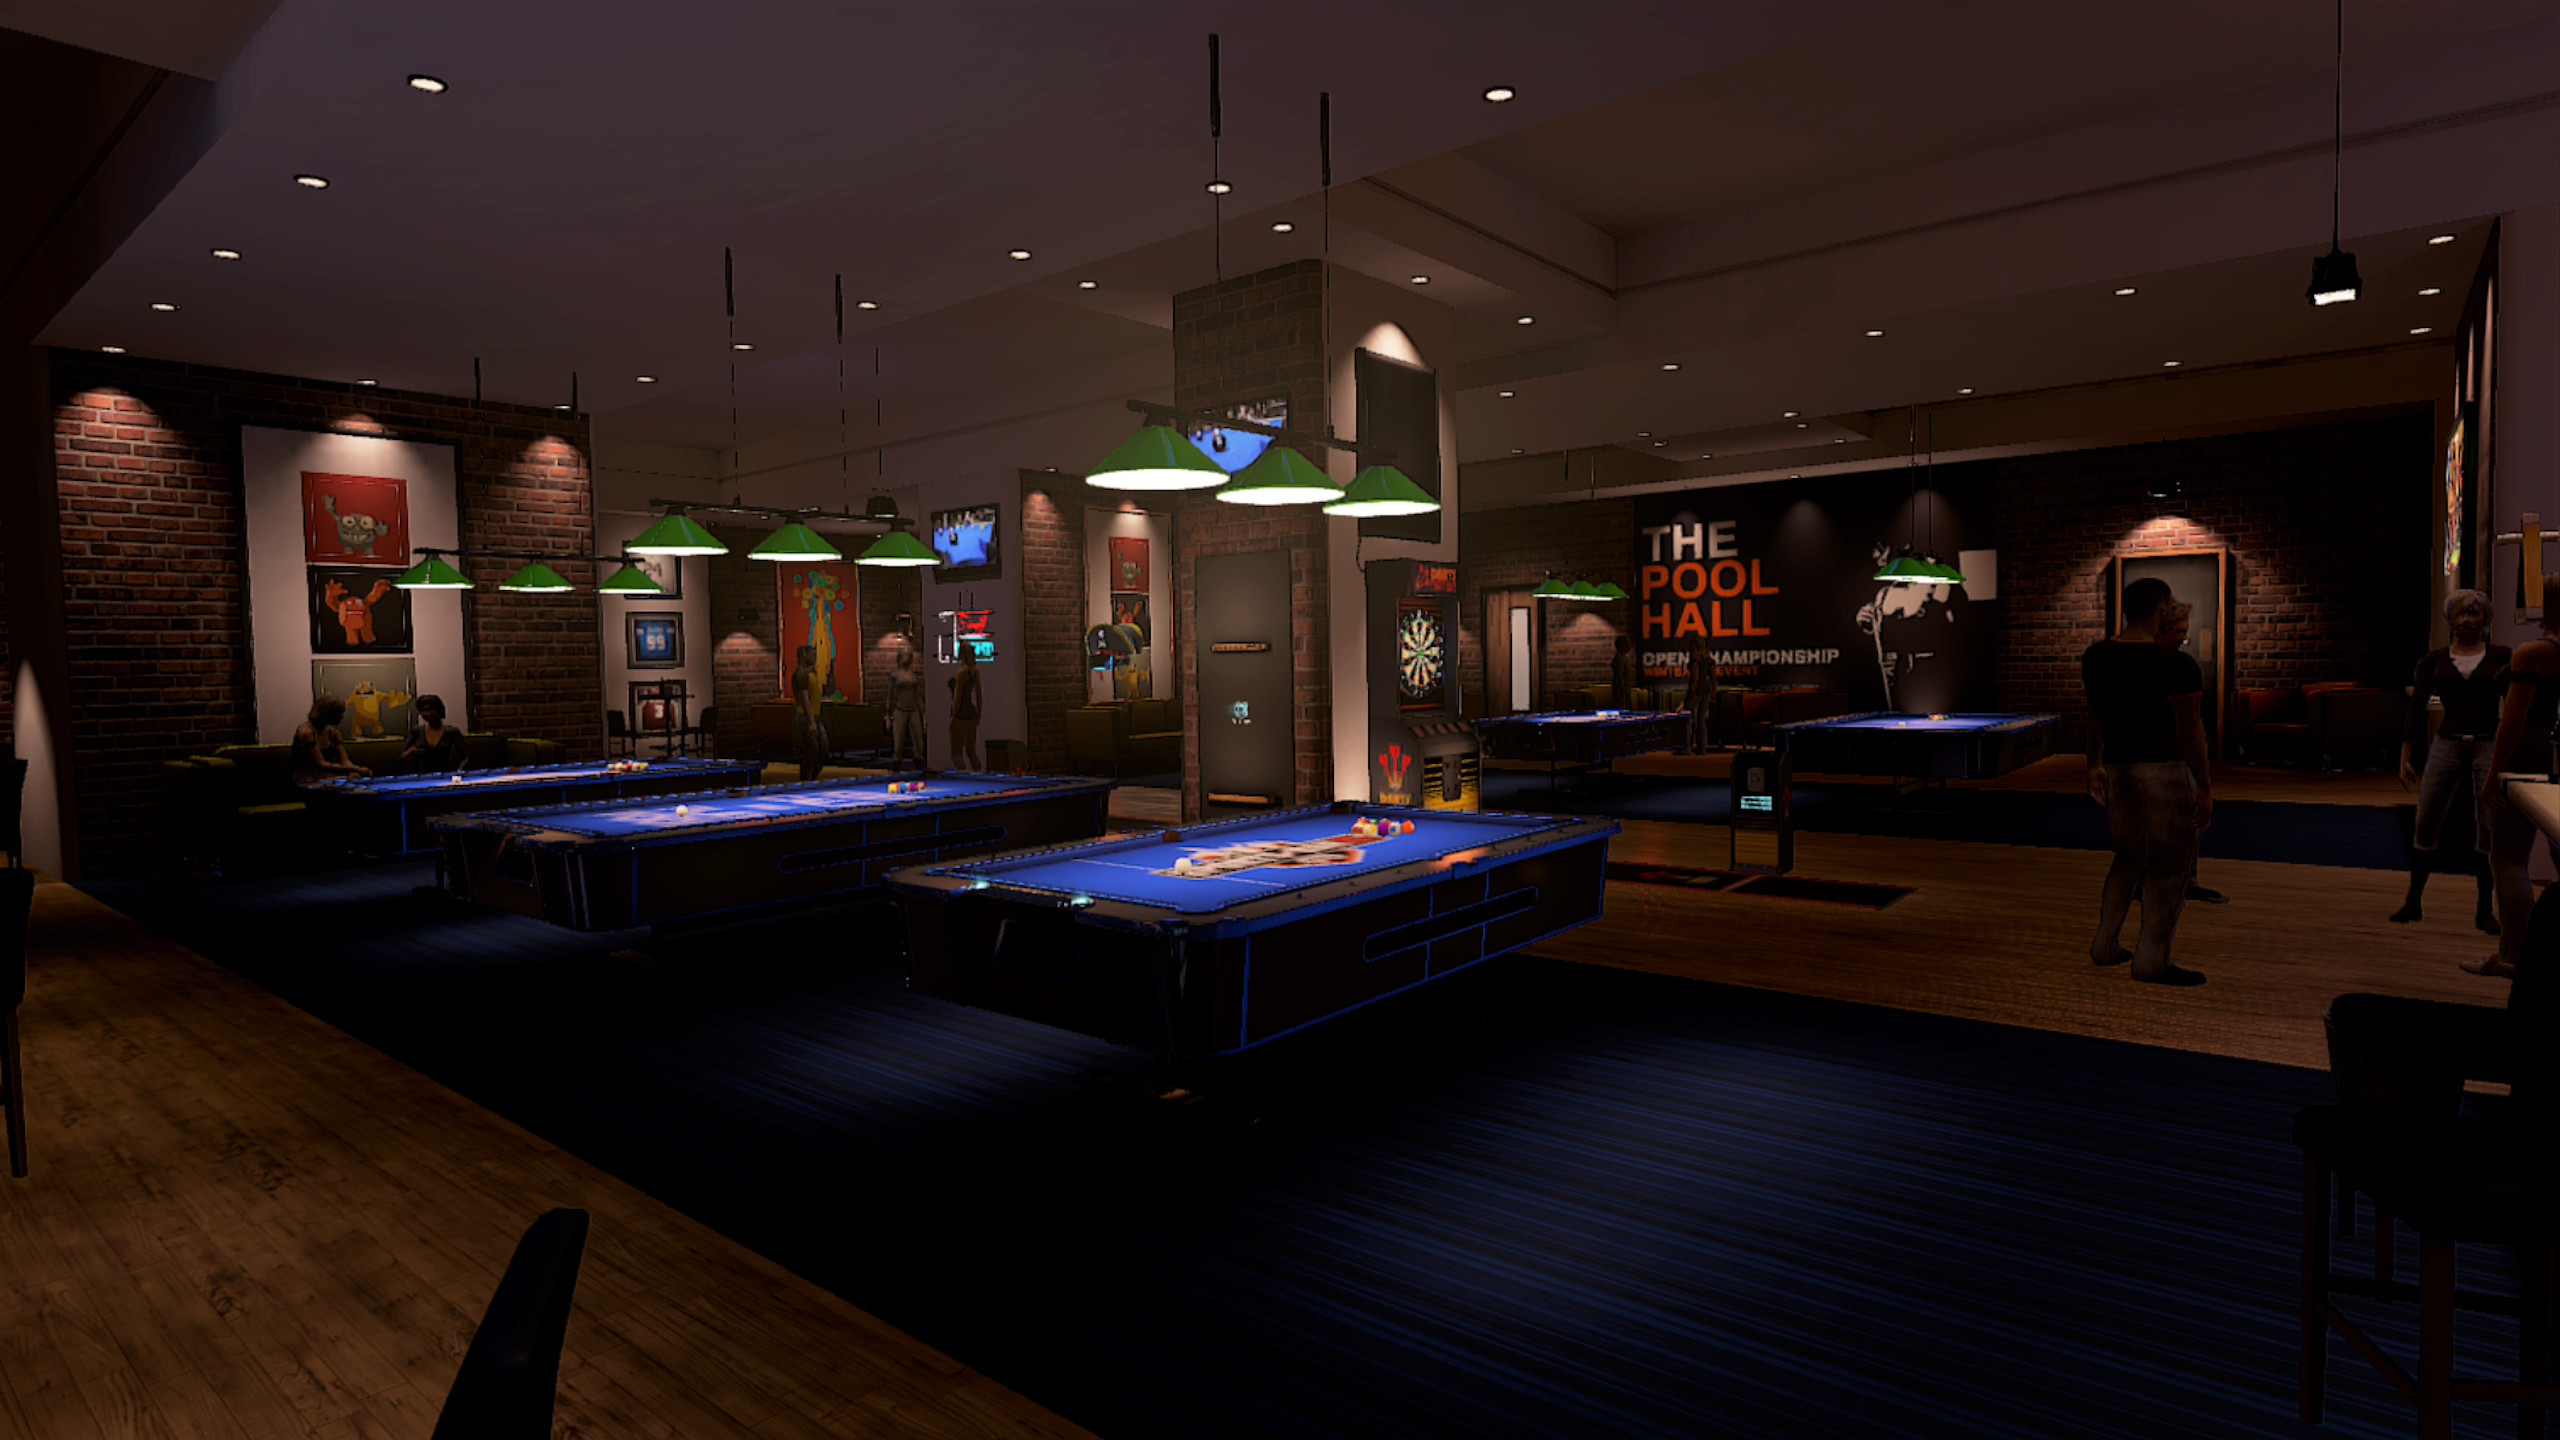 Sports Bar VR screenshot